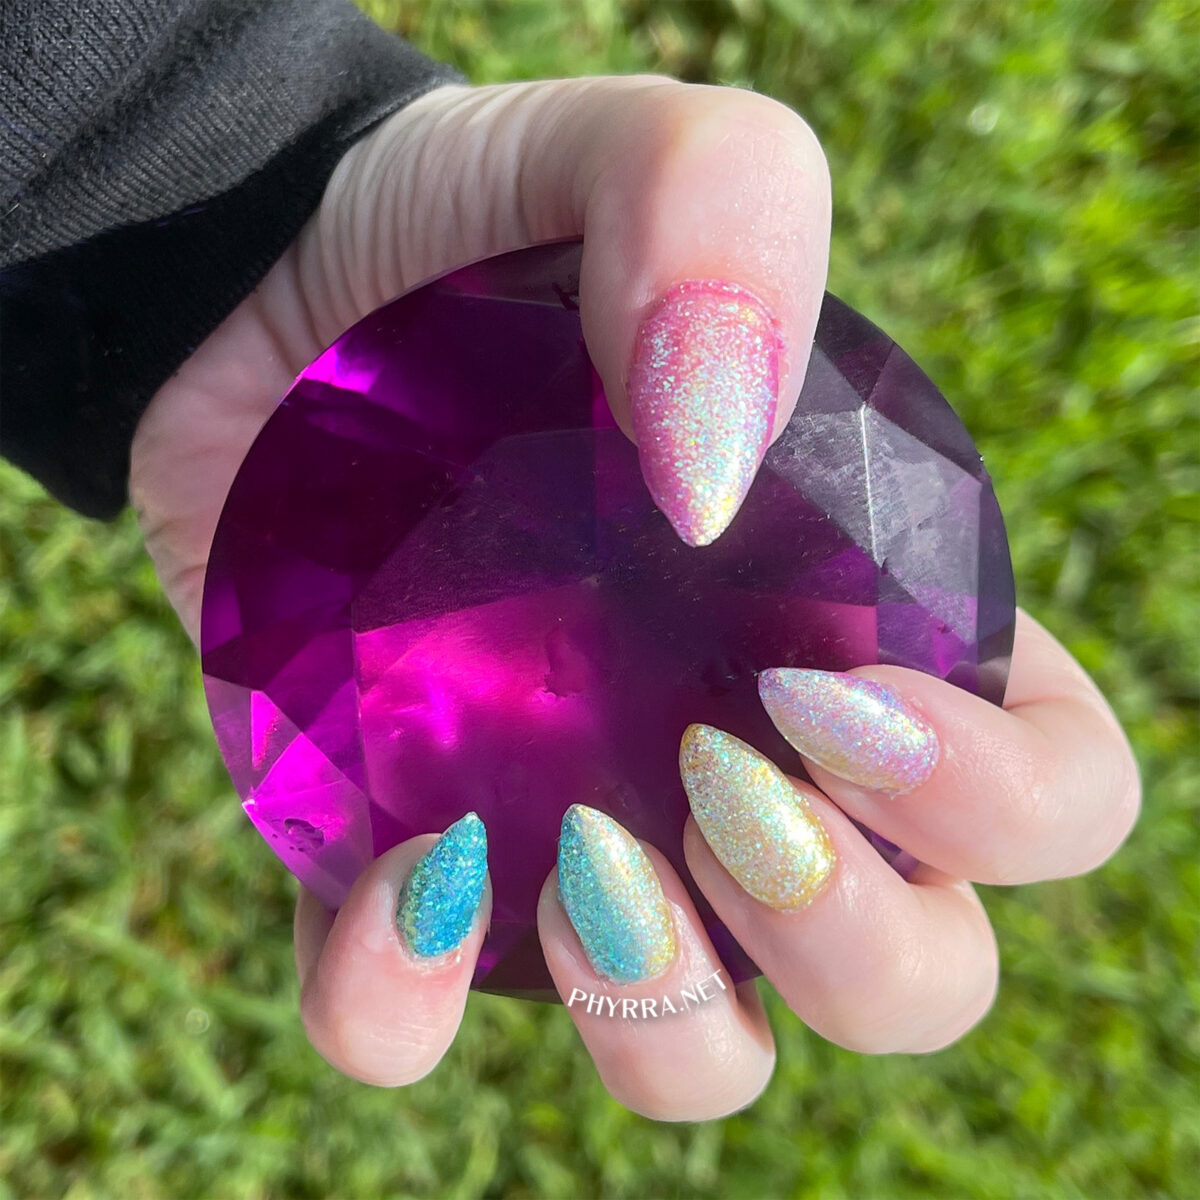 Daily Charme Unichrome powder on pan pride nails holding a purple gem